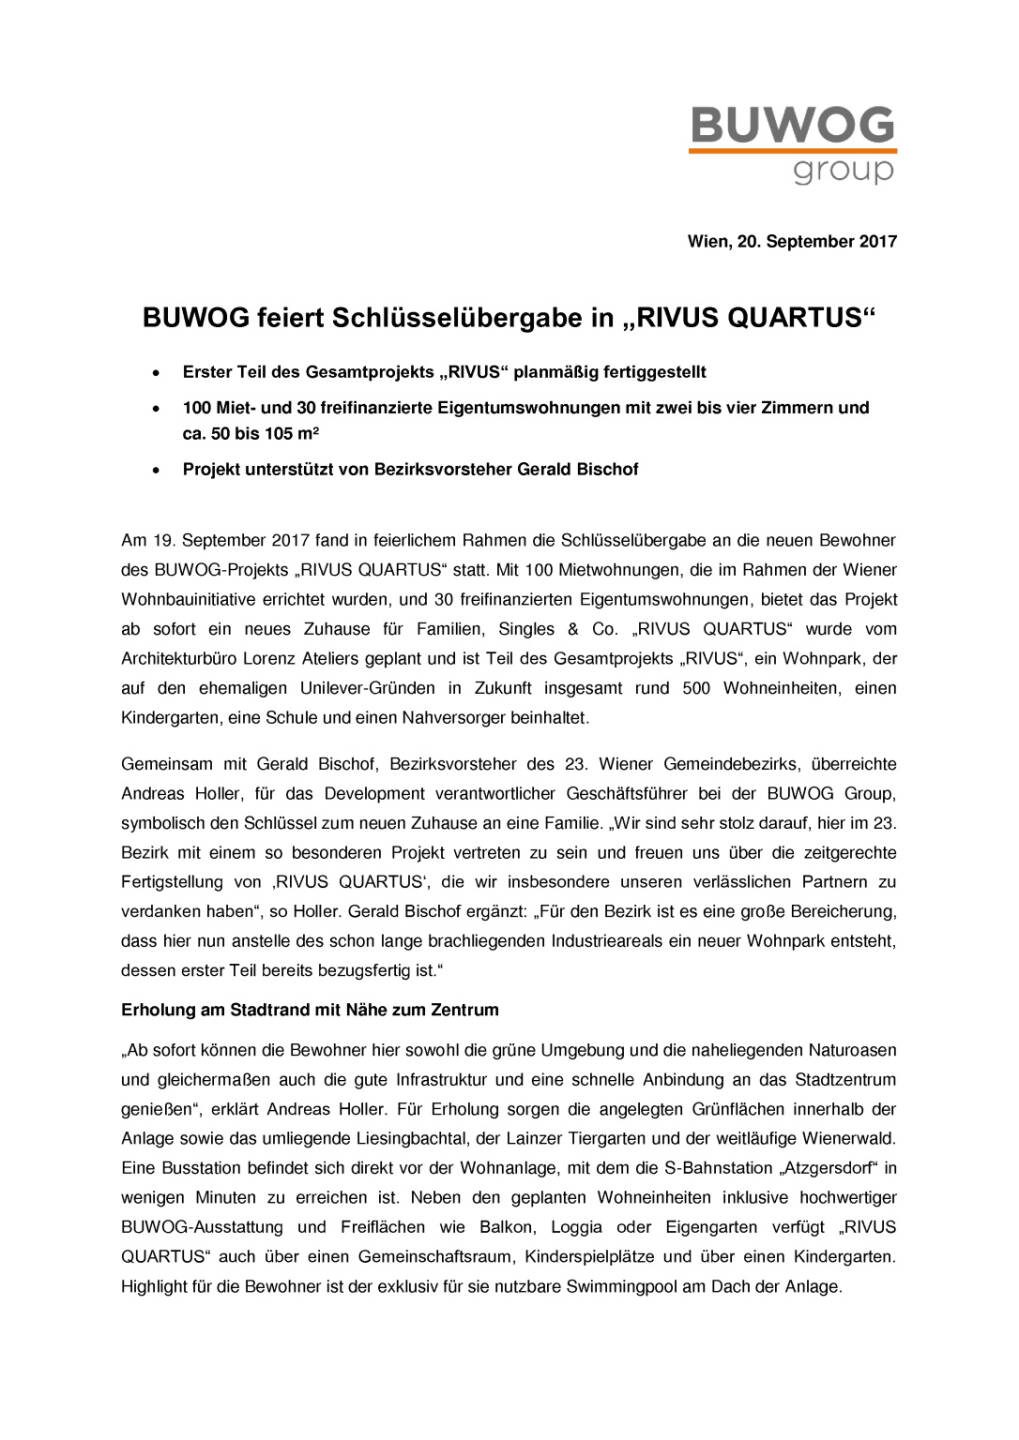 Buwog feiert Schlüsselübergabe in „Rivus Quartus“, Seite 1/2, komplettes Dokument unter http://boerse-social.com/static/uploads/file_2343_buwog_feiert_schlusselubergabe_in_rivus_quartus.pdf